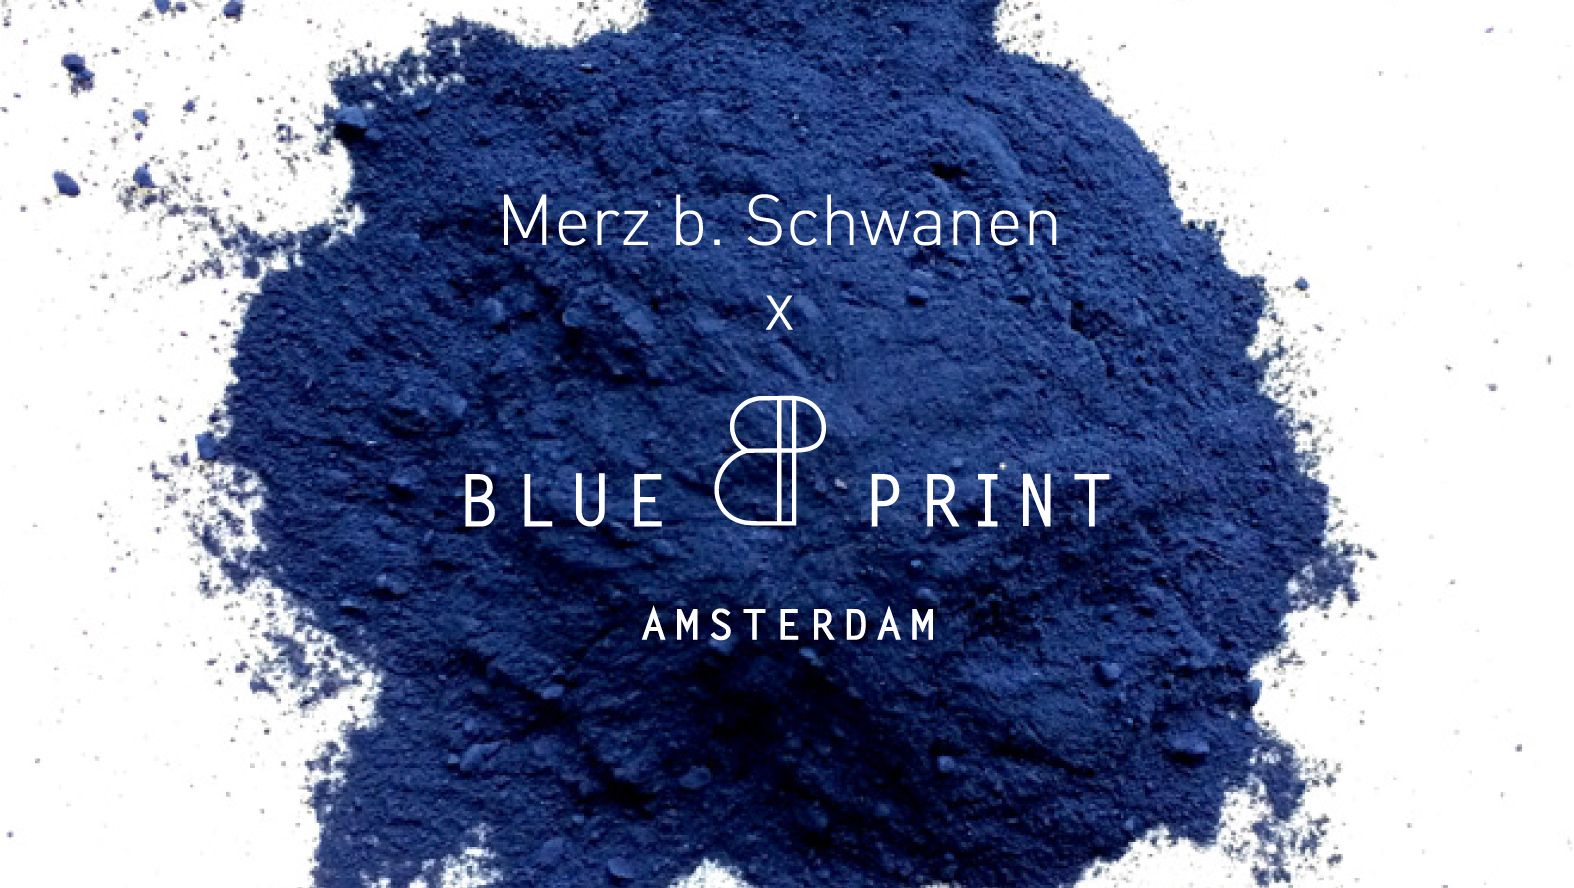 Merz b. Schwanen X Blue Print Amsterdam